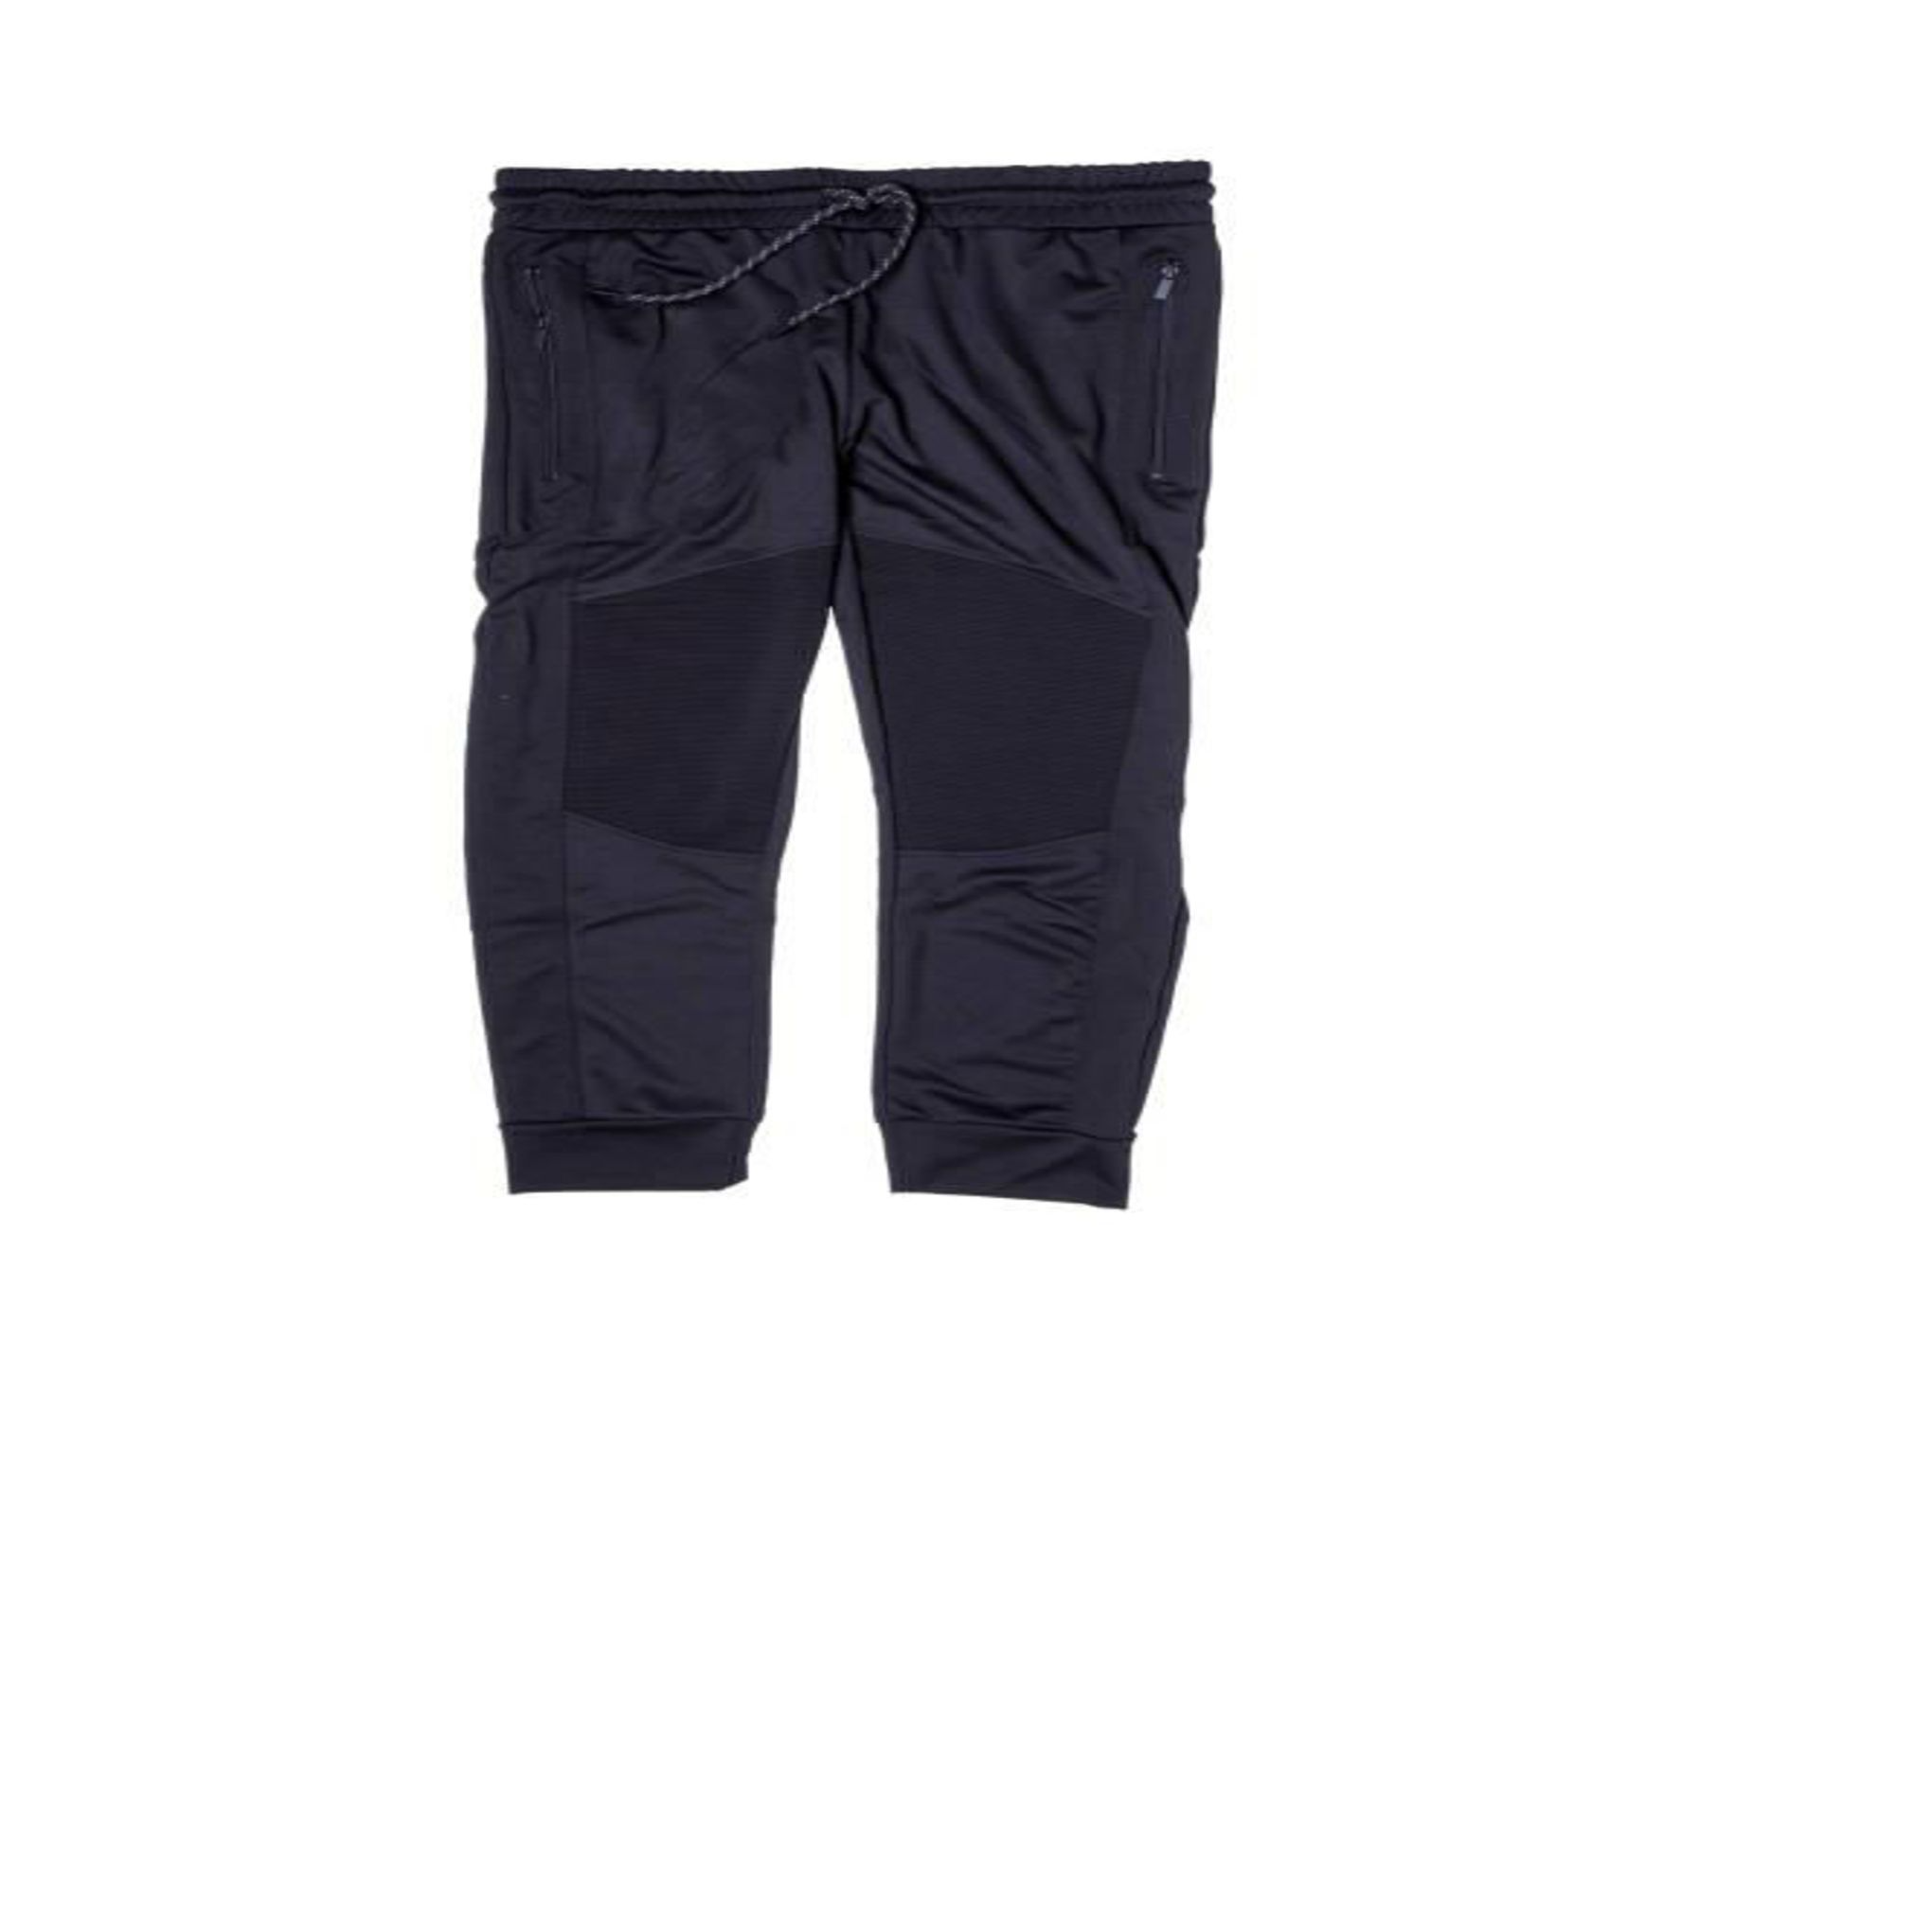 Men's Sports Trouser Exporters, Wholesaler & Manufacturer | Globaltradeplaza.com